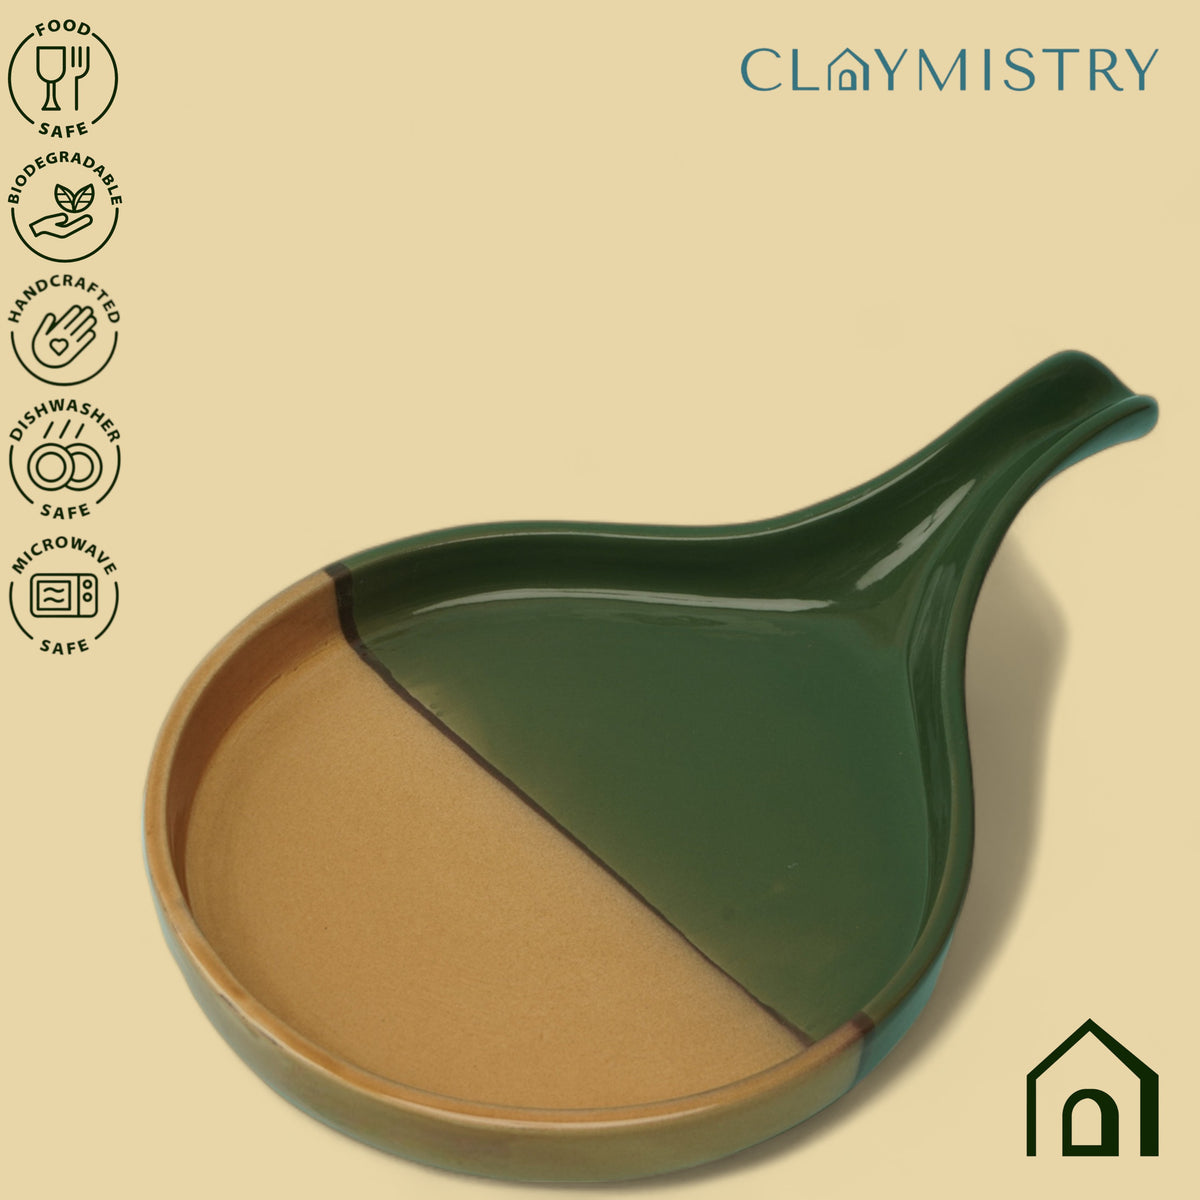 Claymistry Ceramic Dinner & Snacks Round Green Mustard with Handle Tray, Set of 1 | 33cm * 21cm * 3cm | Glossy Finish | Dishwasher & Microwave Safe | Dinnerware Plate Thali | Premium Kitchen Crockery